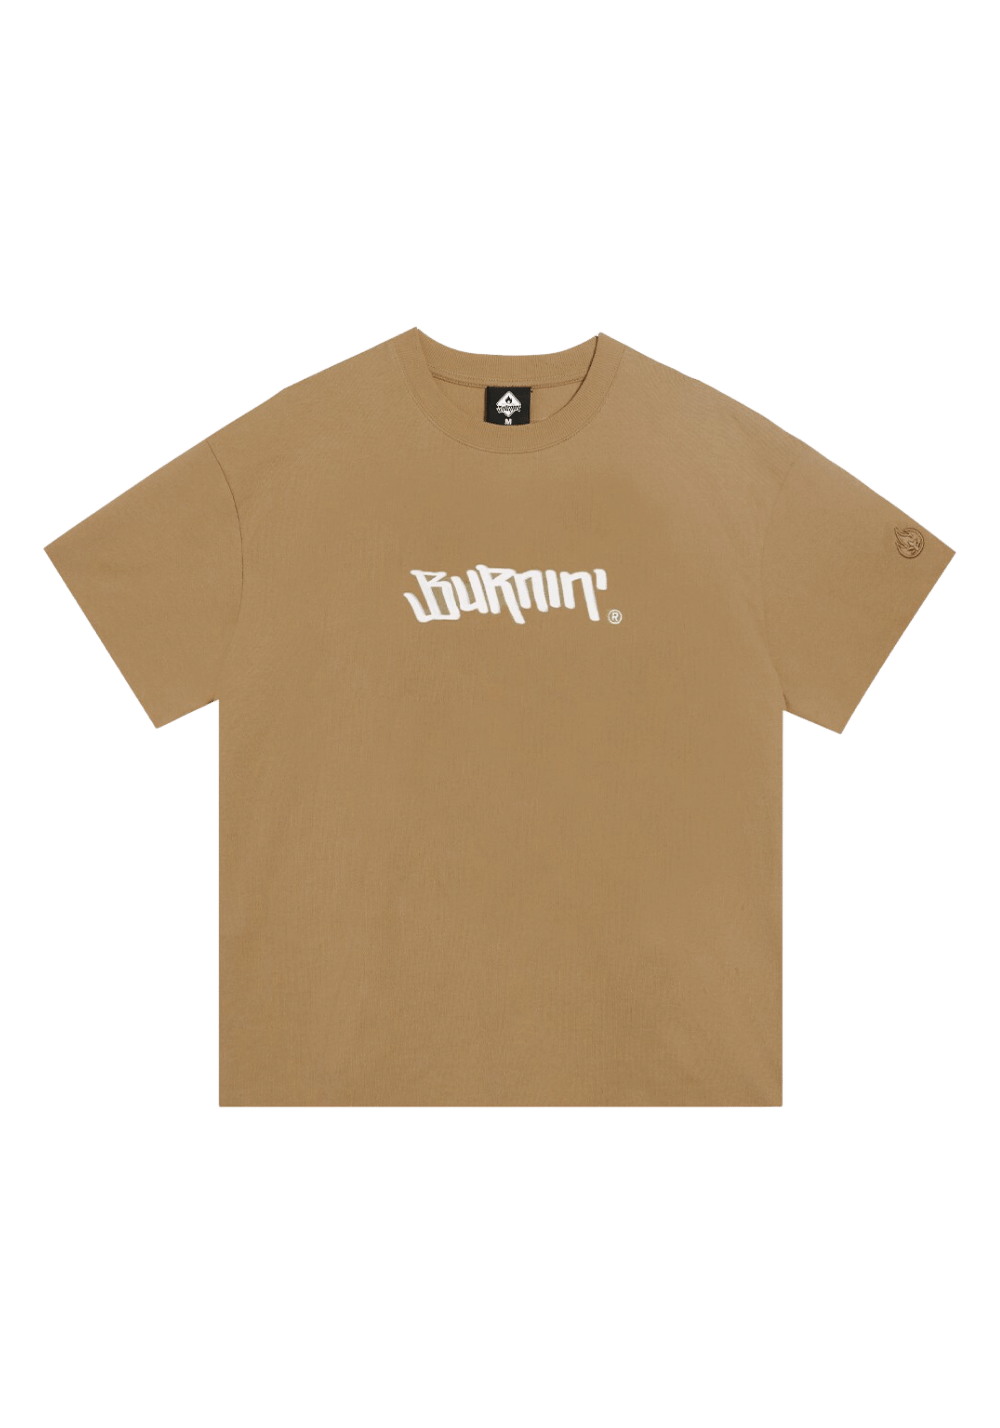 Horizontal Logo Oversized T-Shirt-Brown - PSYLOS 1, Horizontal Logo Oversized T-Shirt-Brown, T-Shirt, Burnin, PSYLOS 1